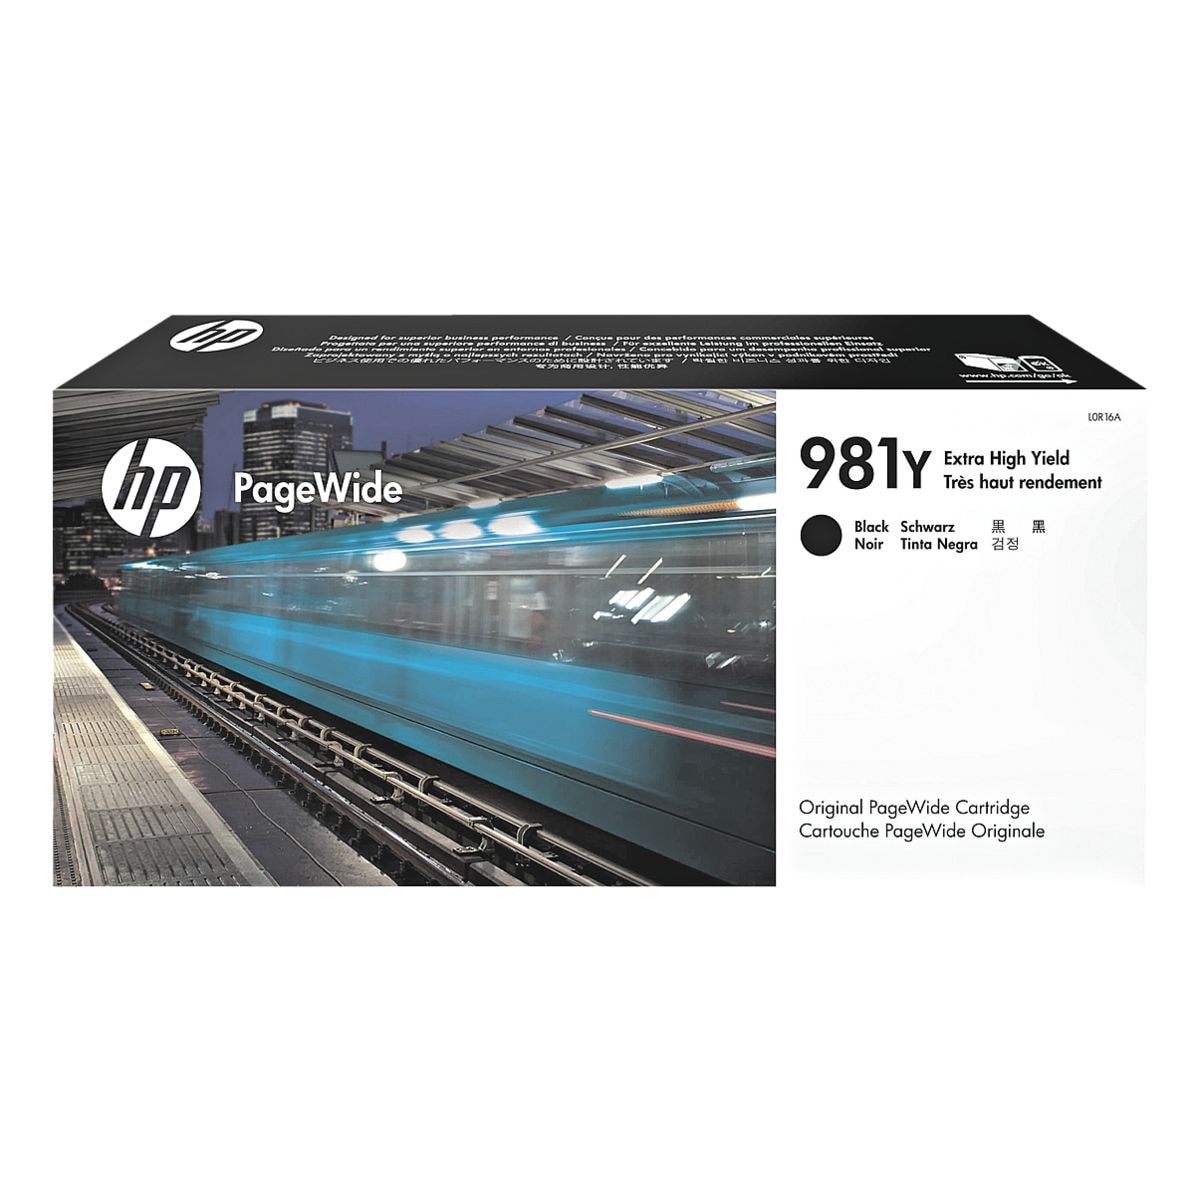 HP Tintenpatrone HP 981Y, schwarz - L0R16A